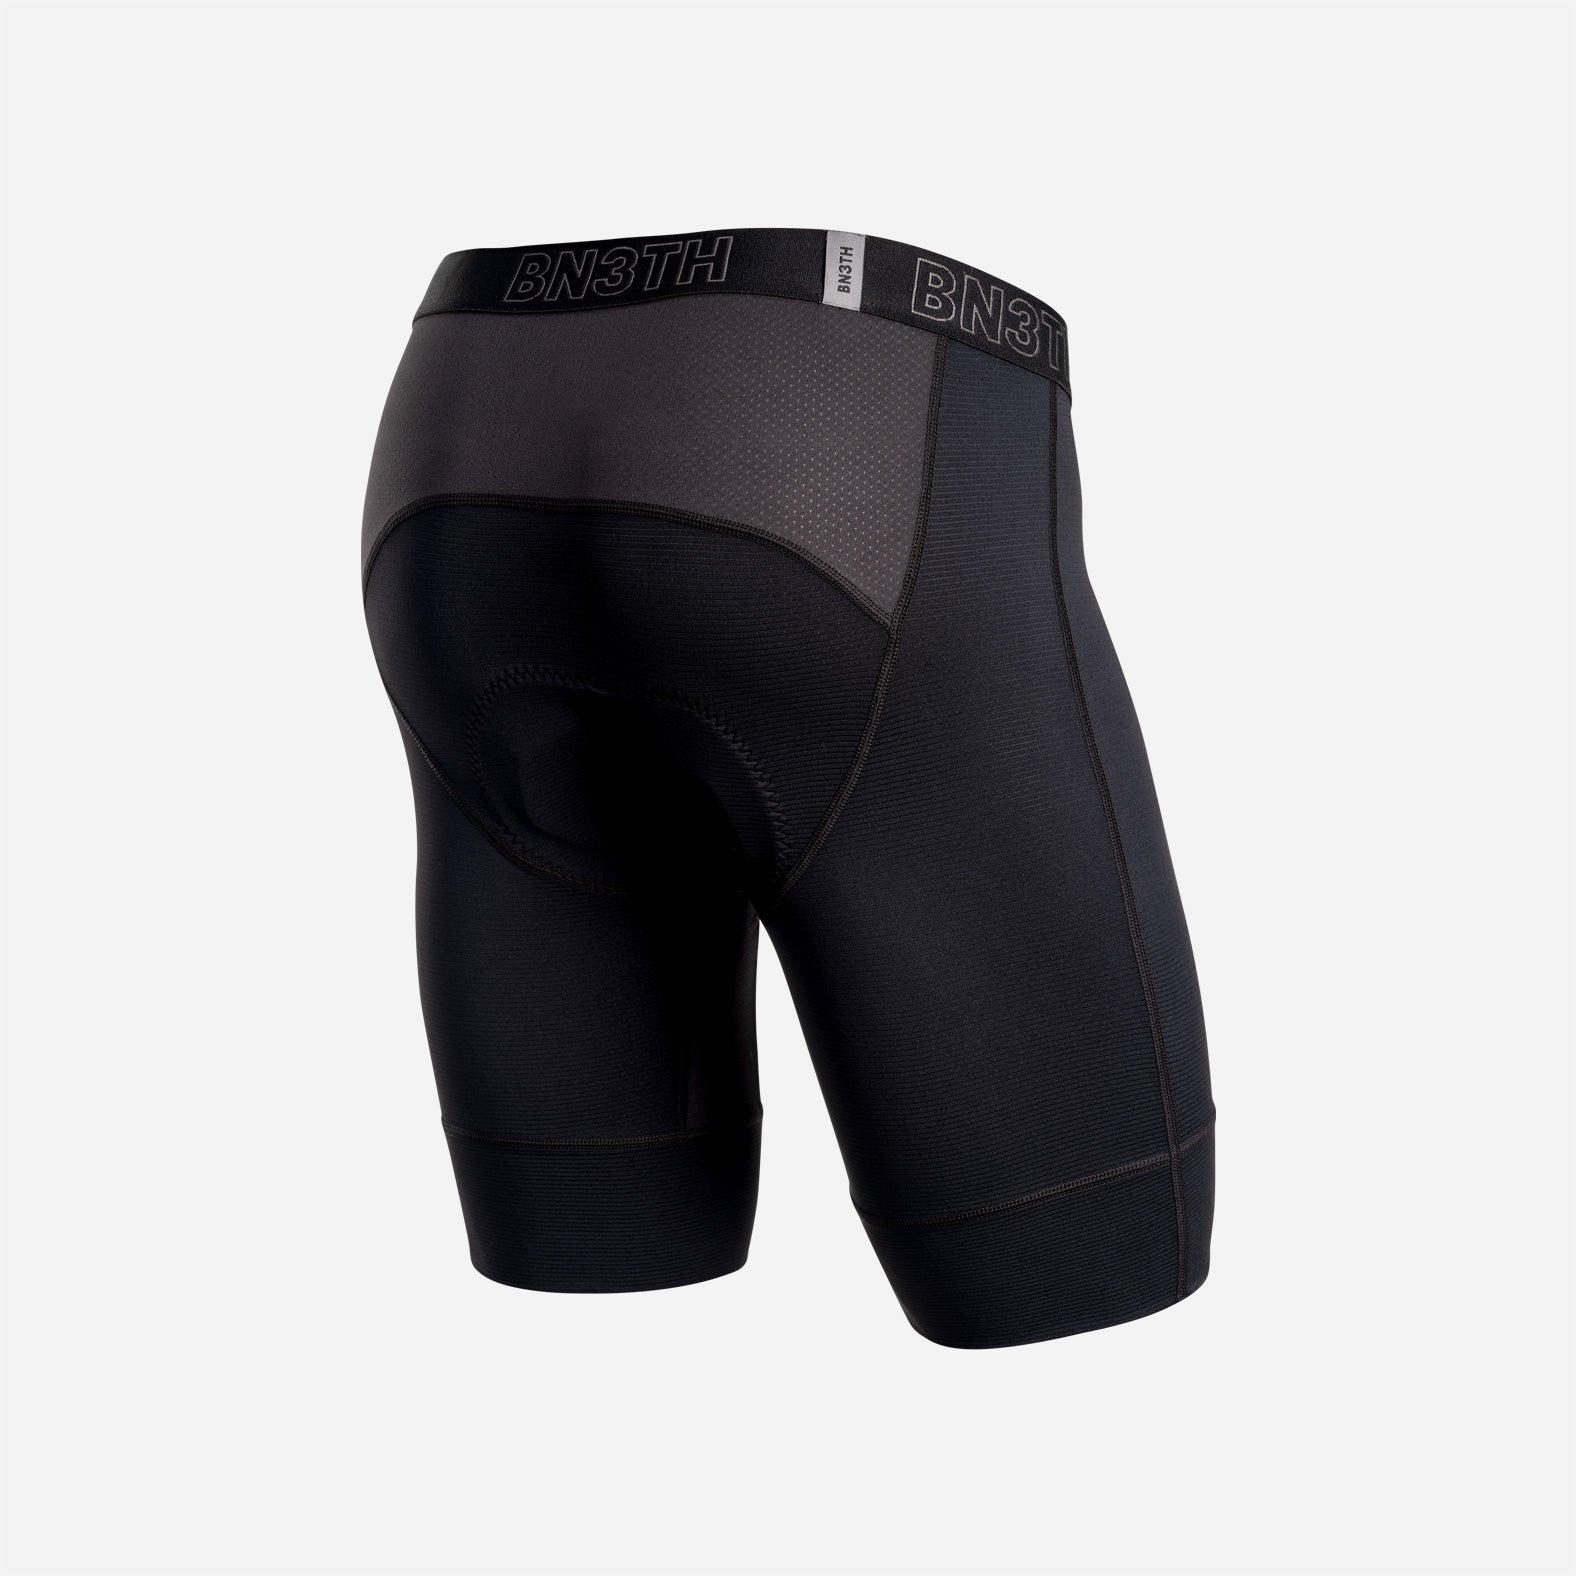 Should I wear underwear when cycling? Do you wear underwear with